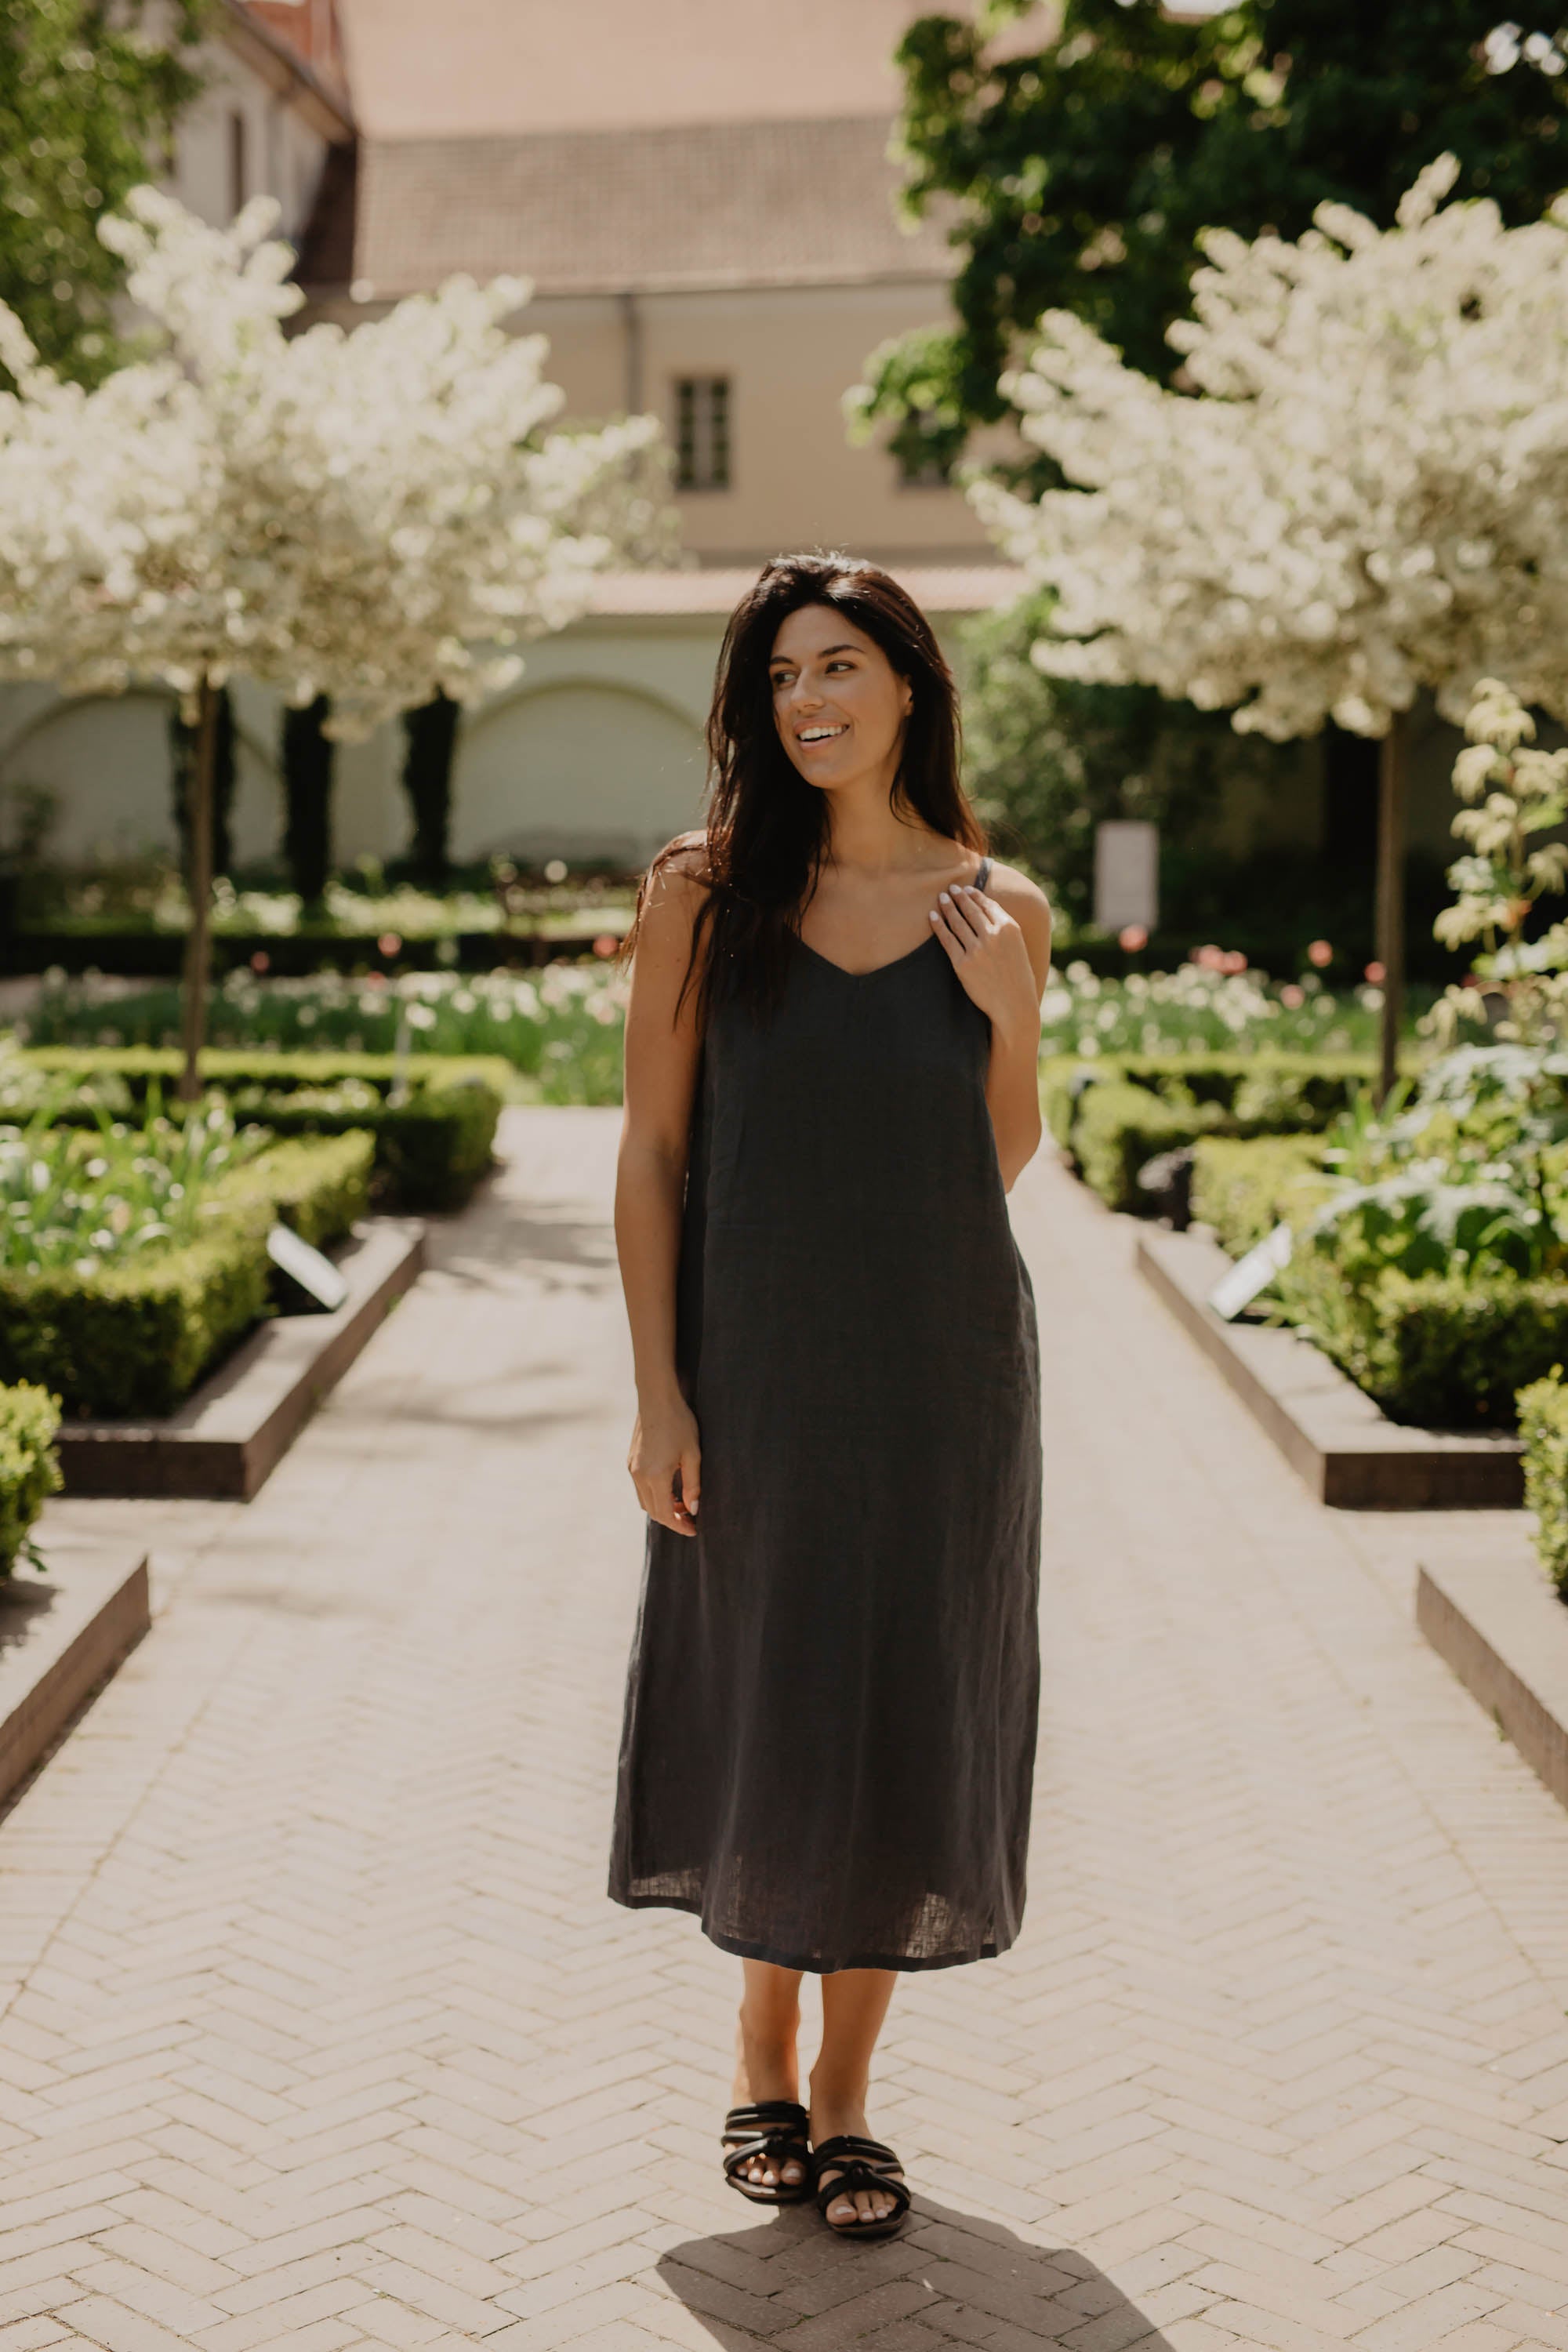 Woman Wearing A Long Dark Linen Dress By AmourLinen In A Blossoming Park